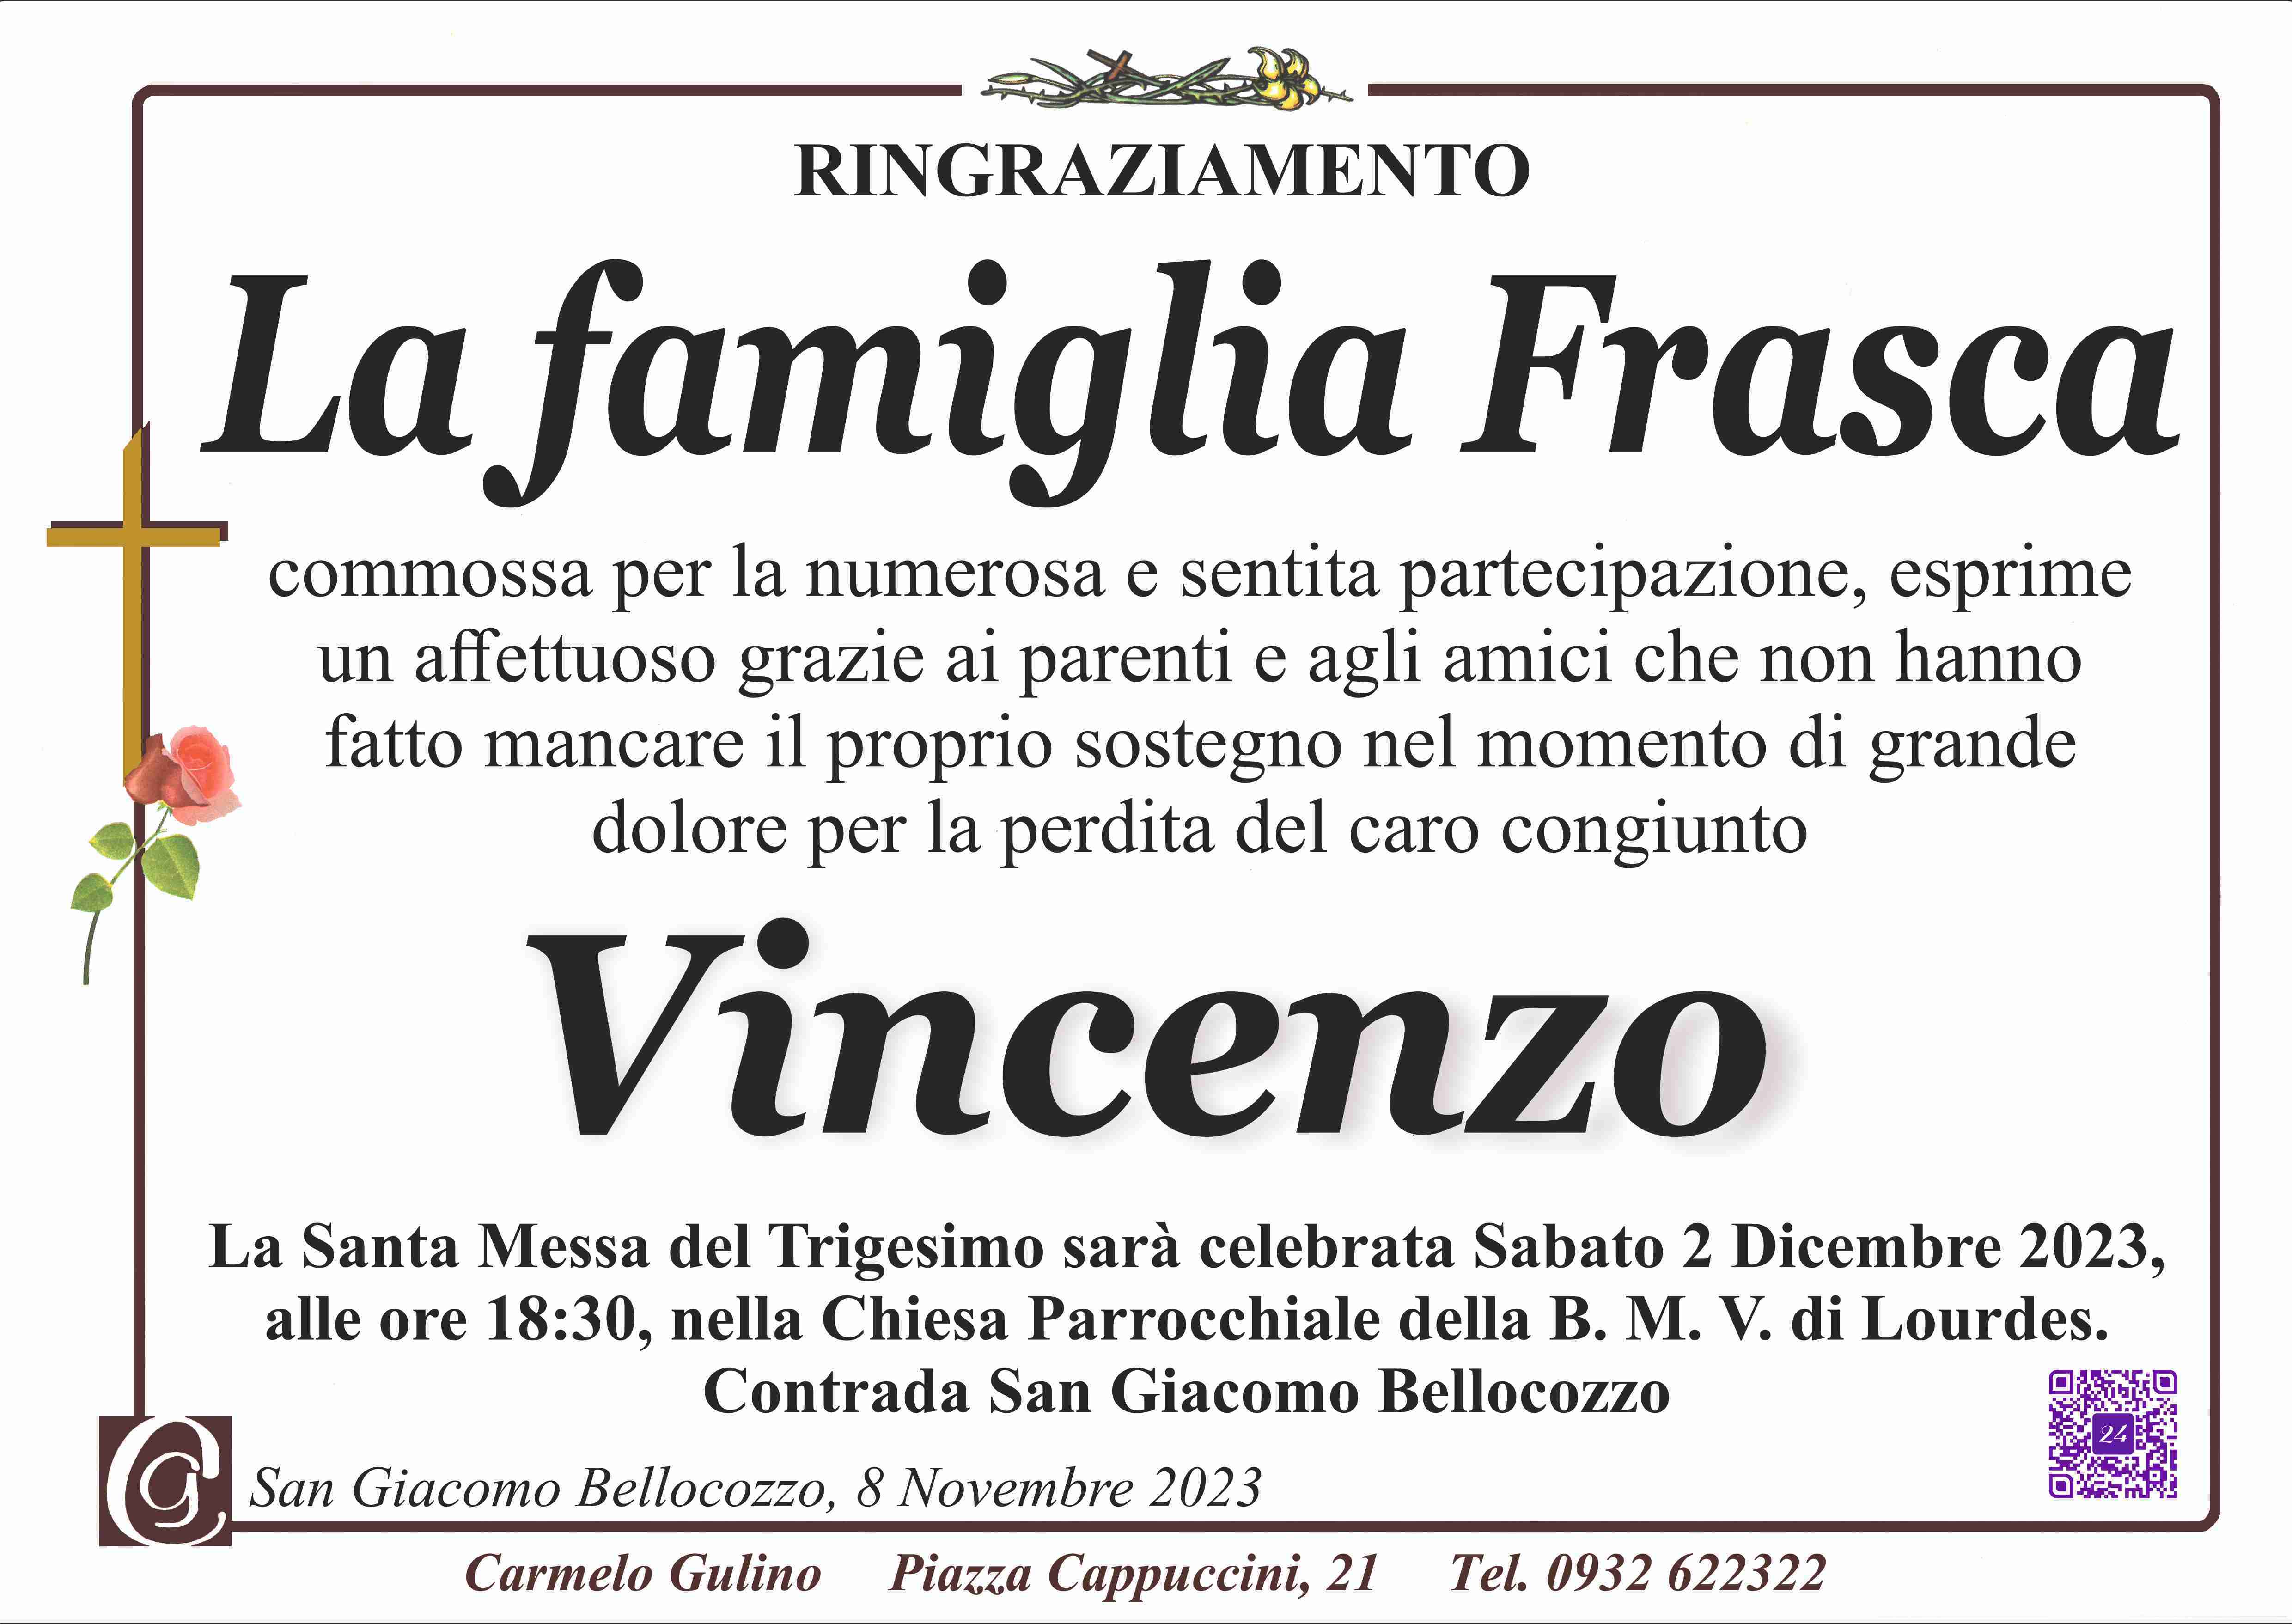 Vincenzo Frasca